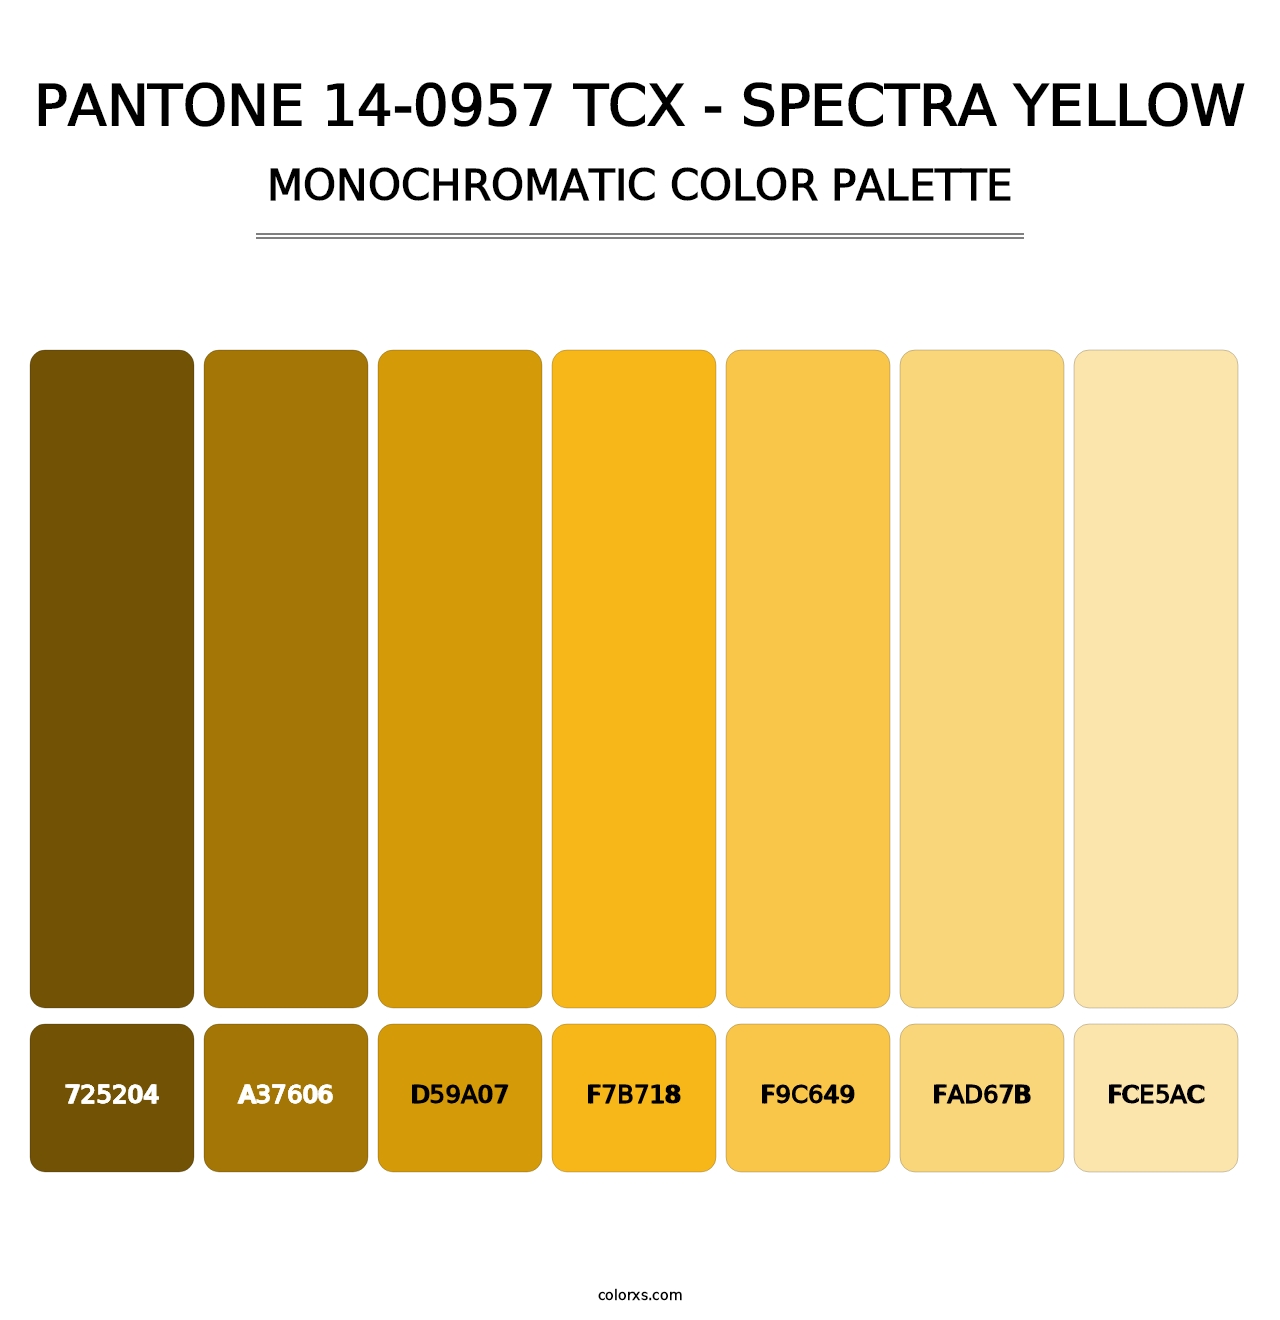 PANTONE 14-0957 TCX - Spectra Yellow - Monochromatic Color Palette